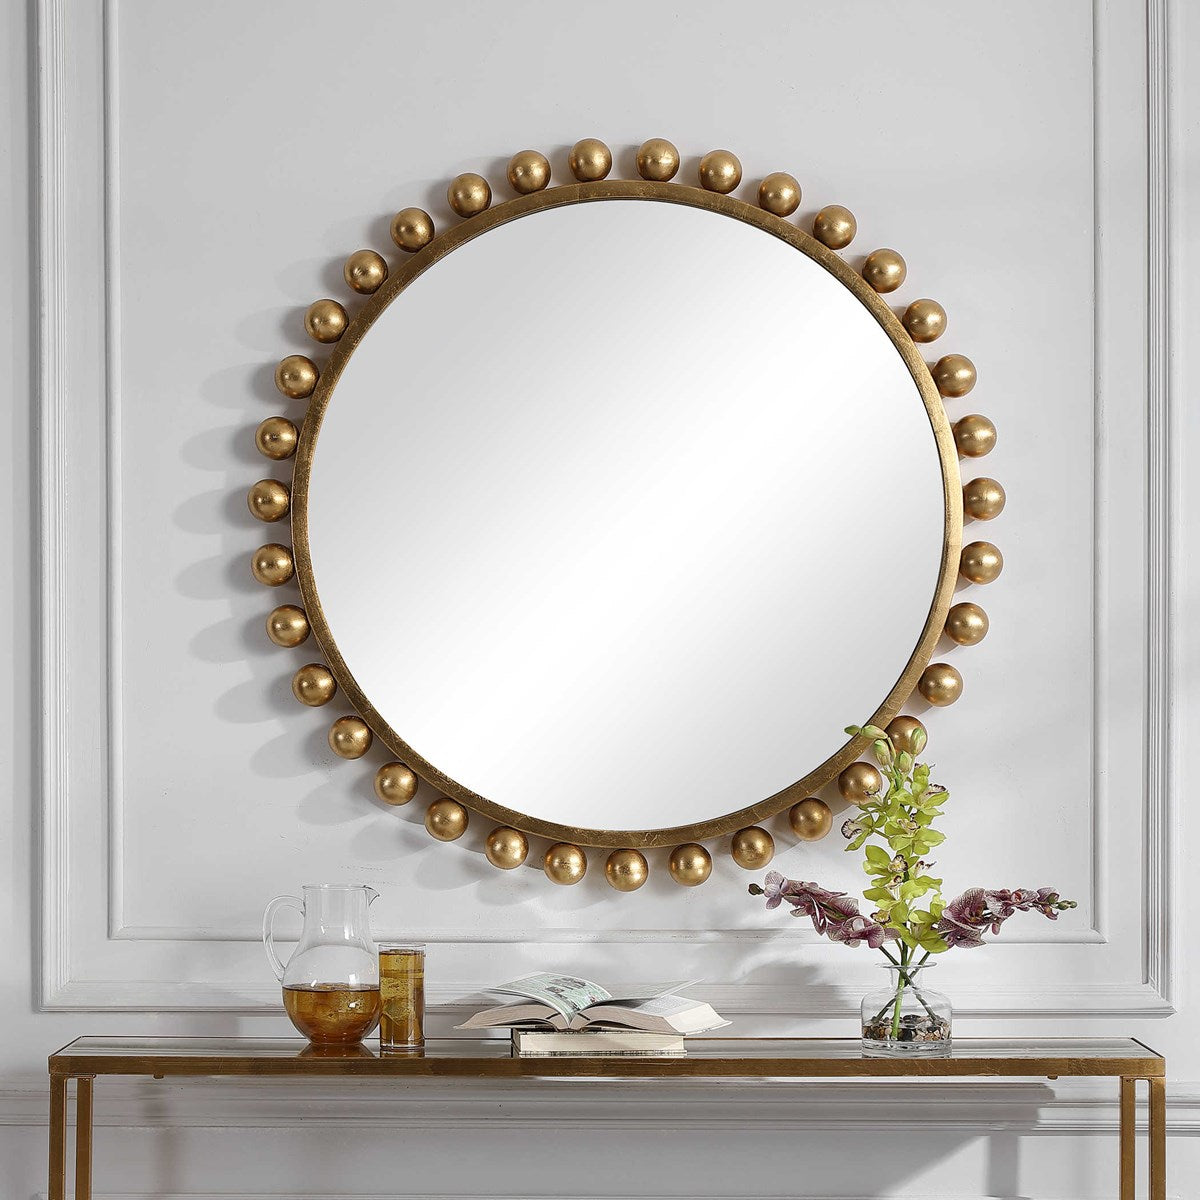 Cyra Wall Mirror Collection